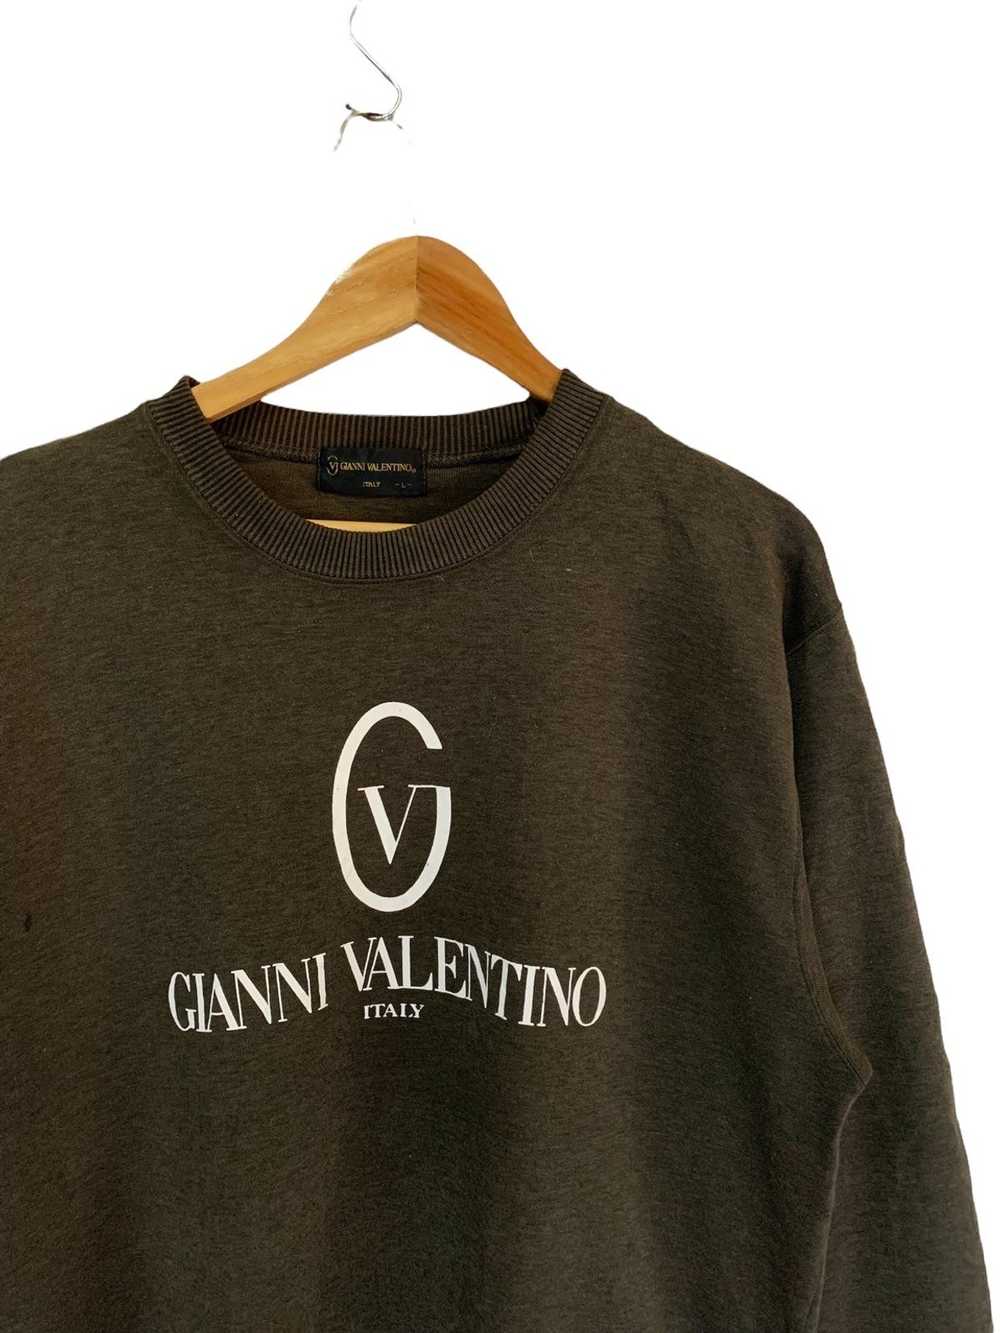 Gianni × Valentino Gianni Valentino sweatshirt - image 3